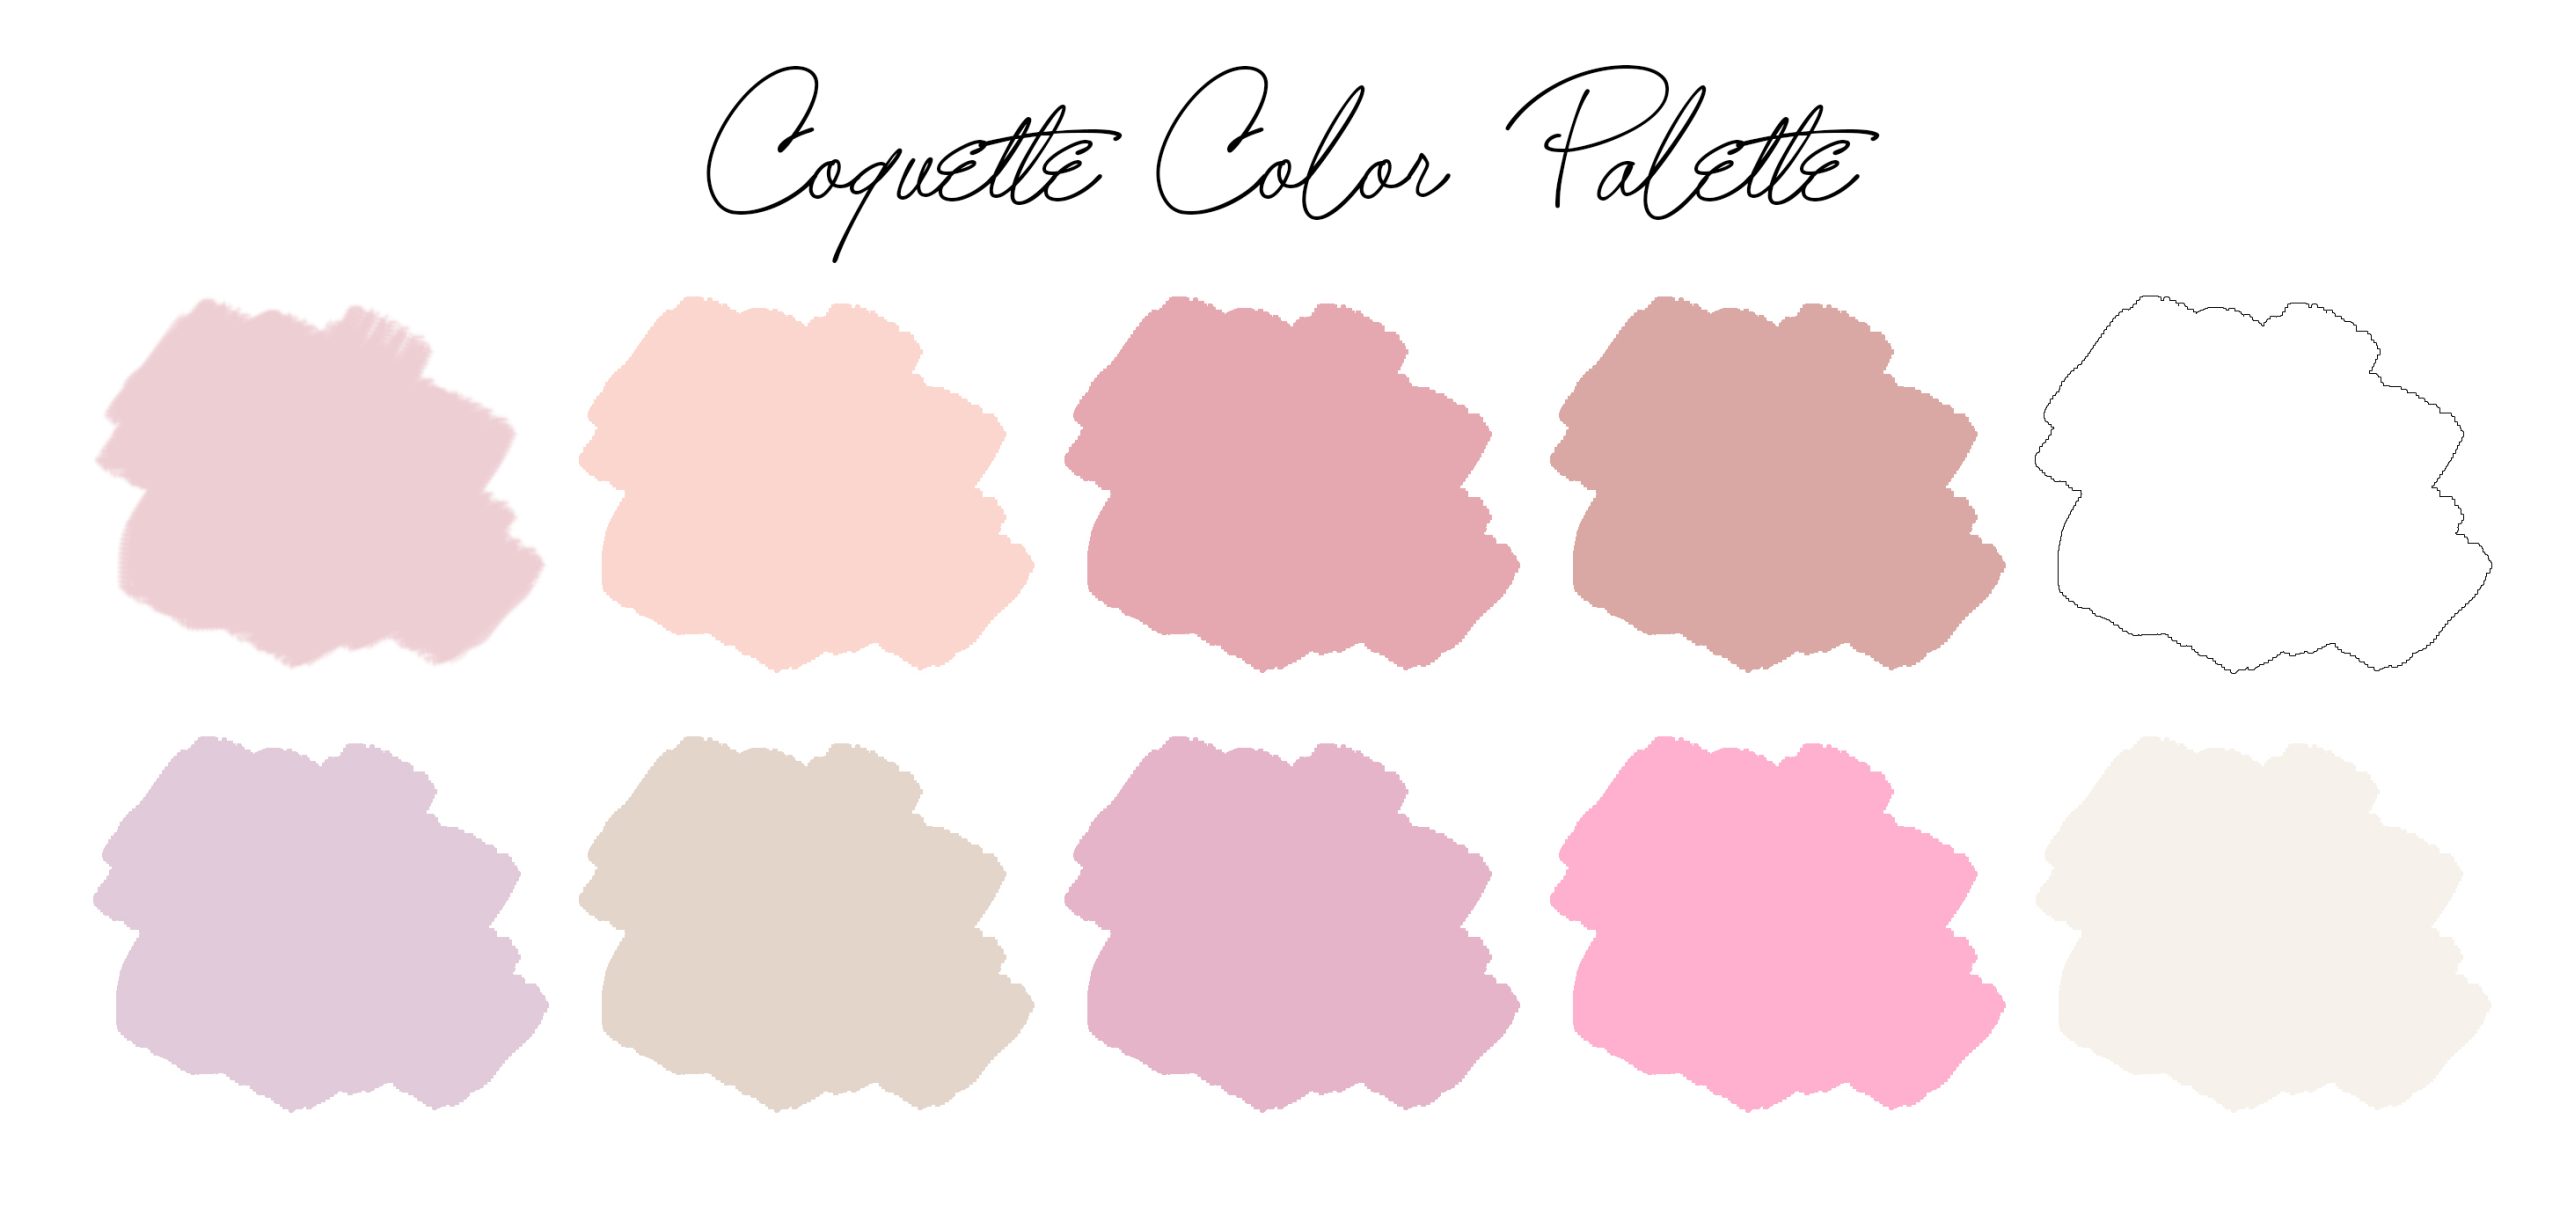 Coquette Color Palette